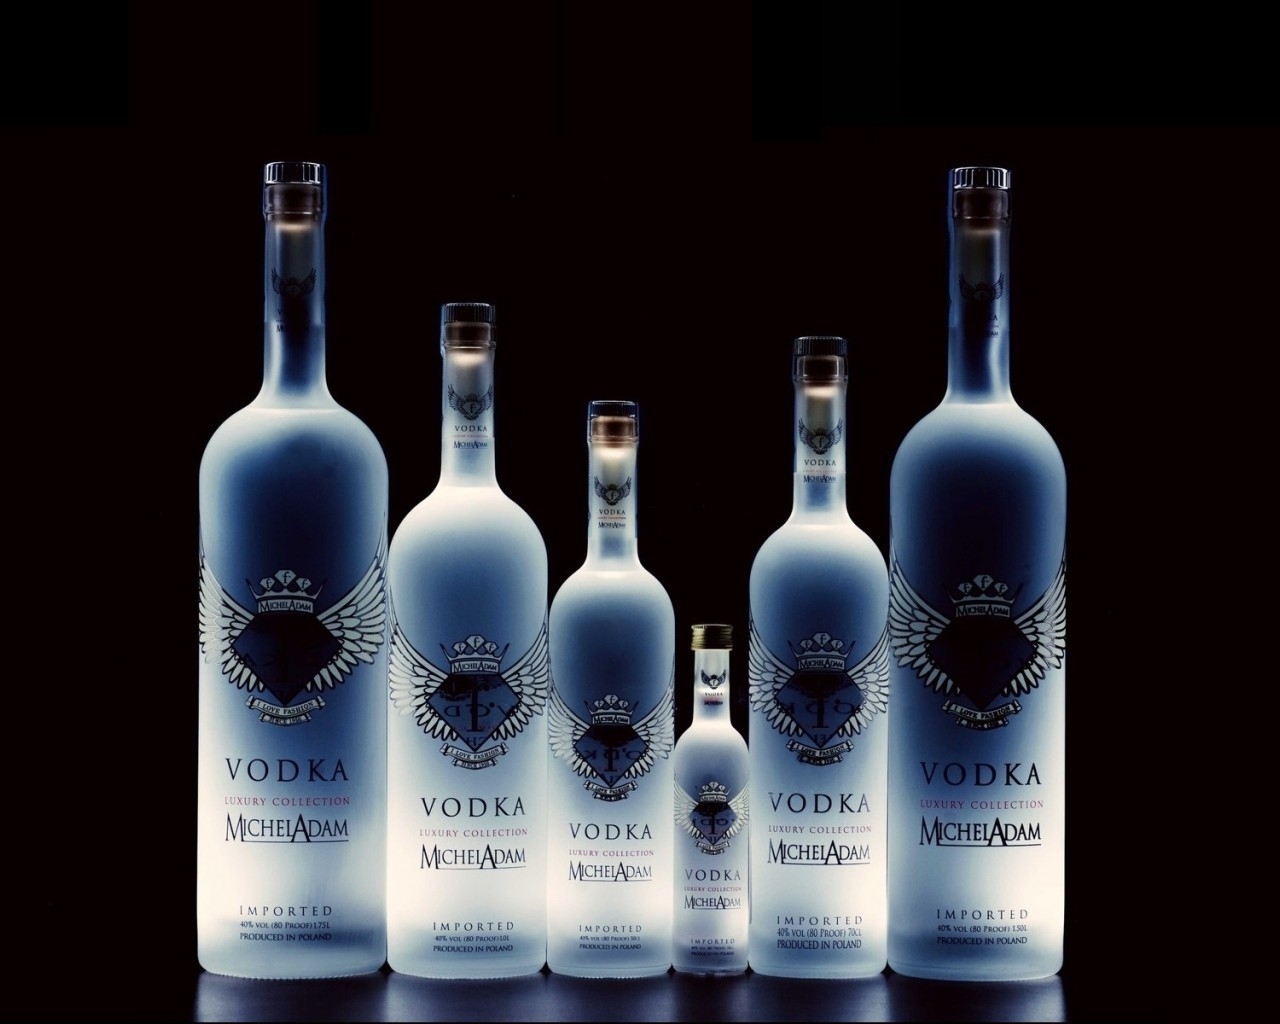 Michel Adam Vodka for 1280 x 1024 resolution